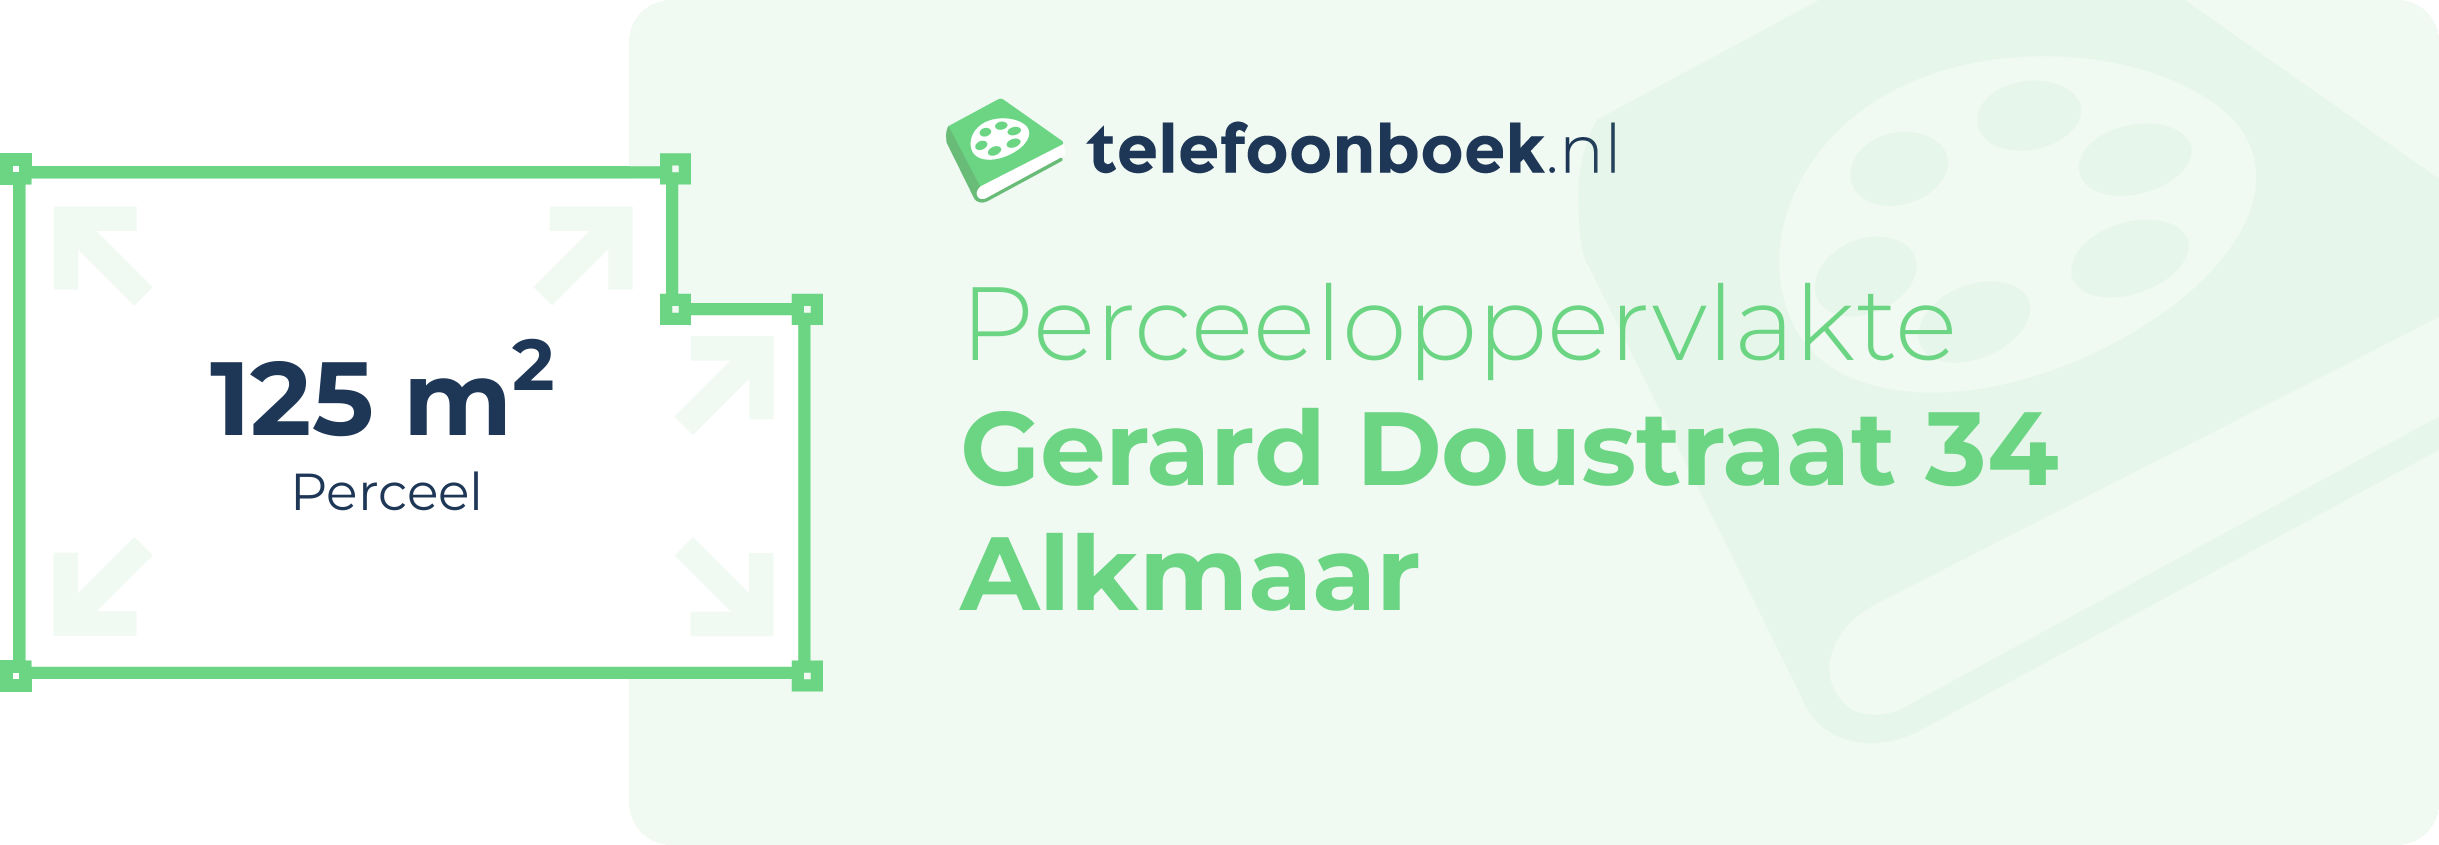 Perceeloppervlakte Gerard Doustraat 34 Alkmaar